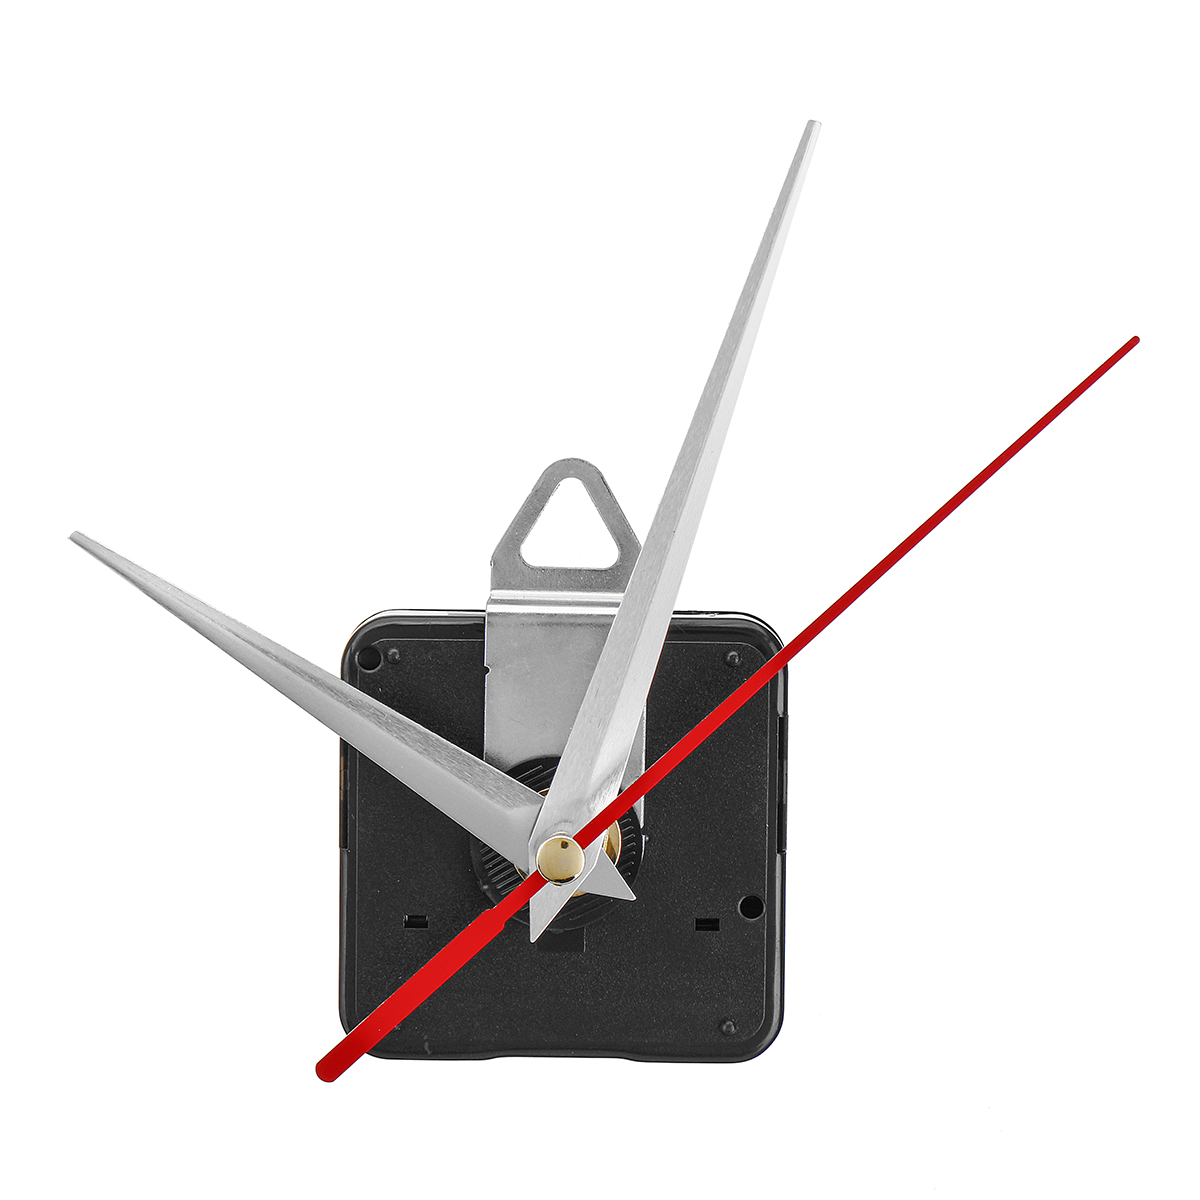 Quartz-Silent-Mode-Clock-Movement-Mechanism-DIY-Kit-Hour-Minute-Second-Hand-1359277